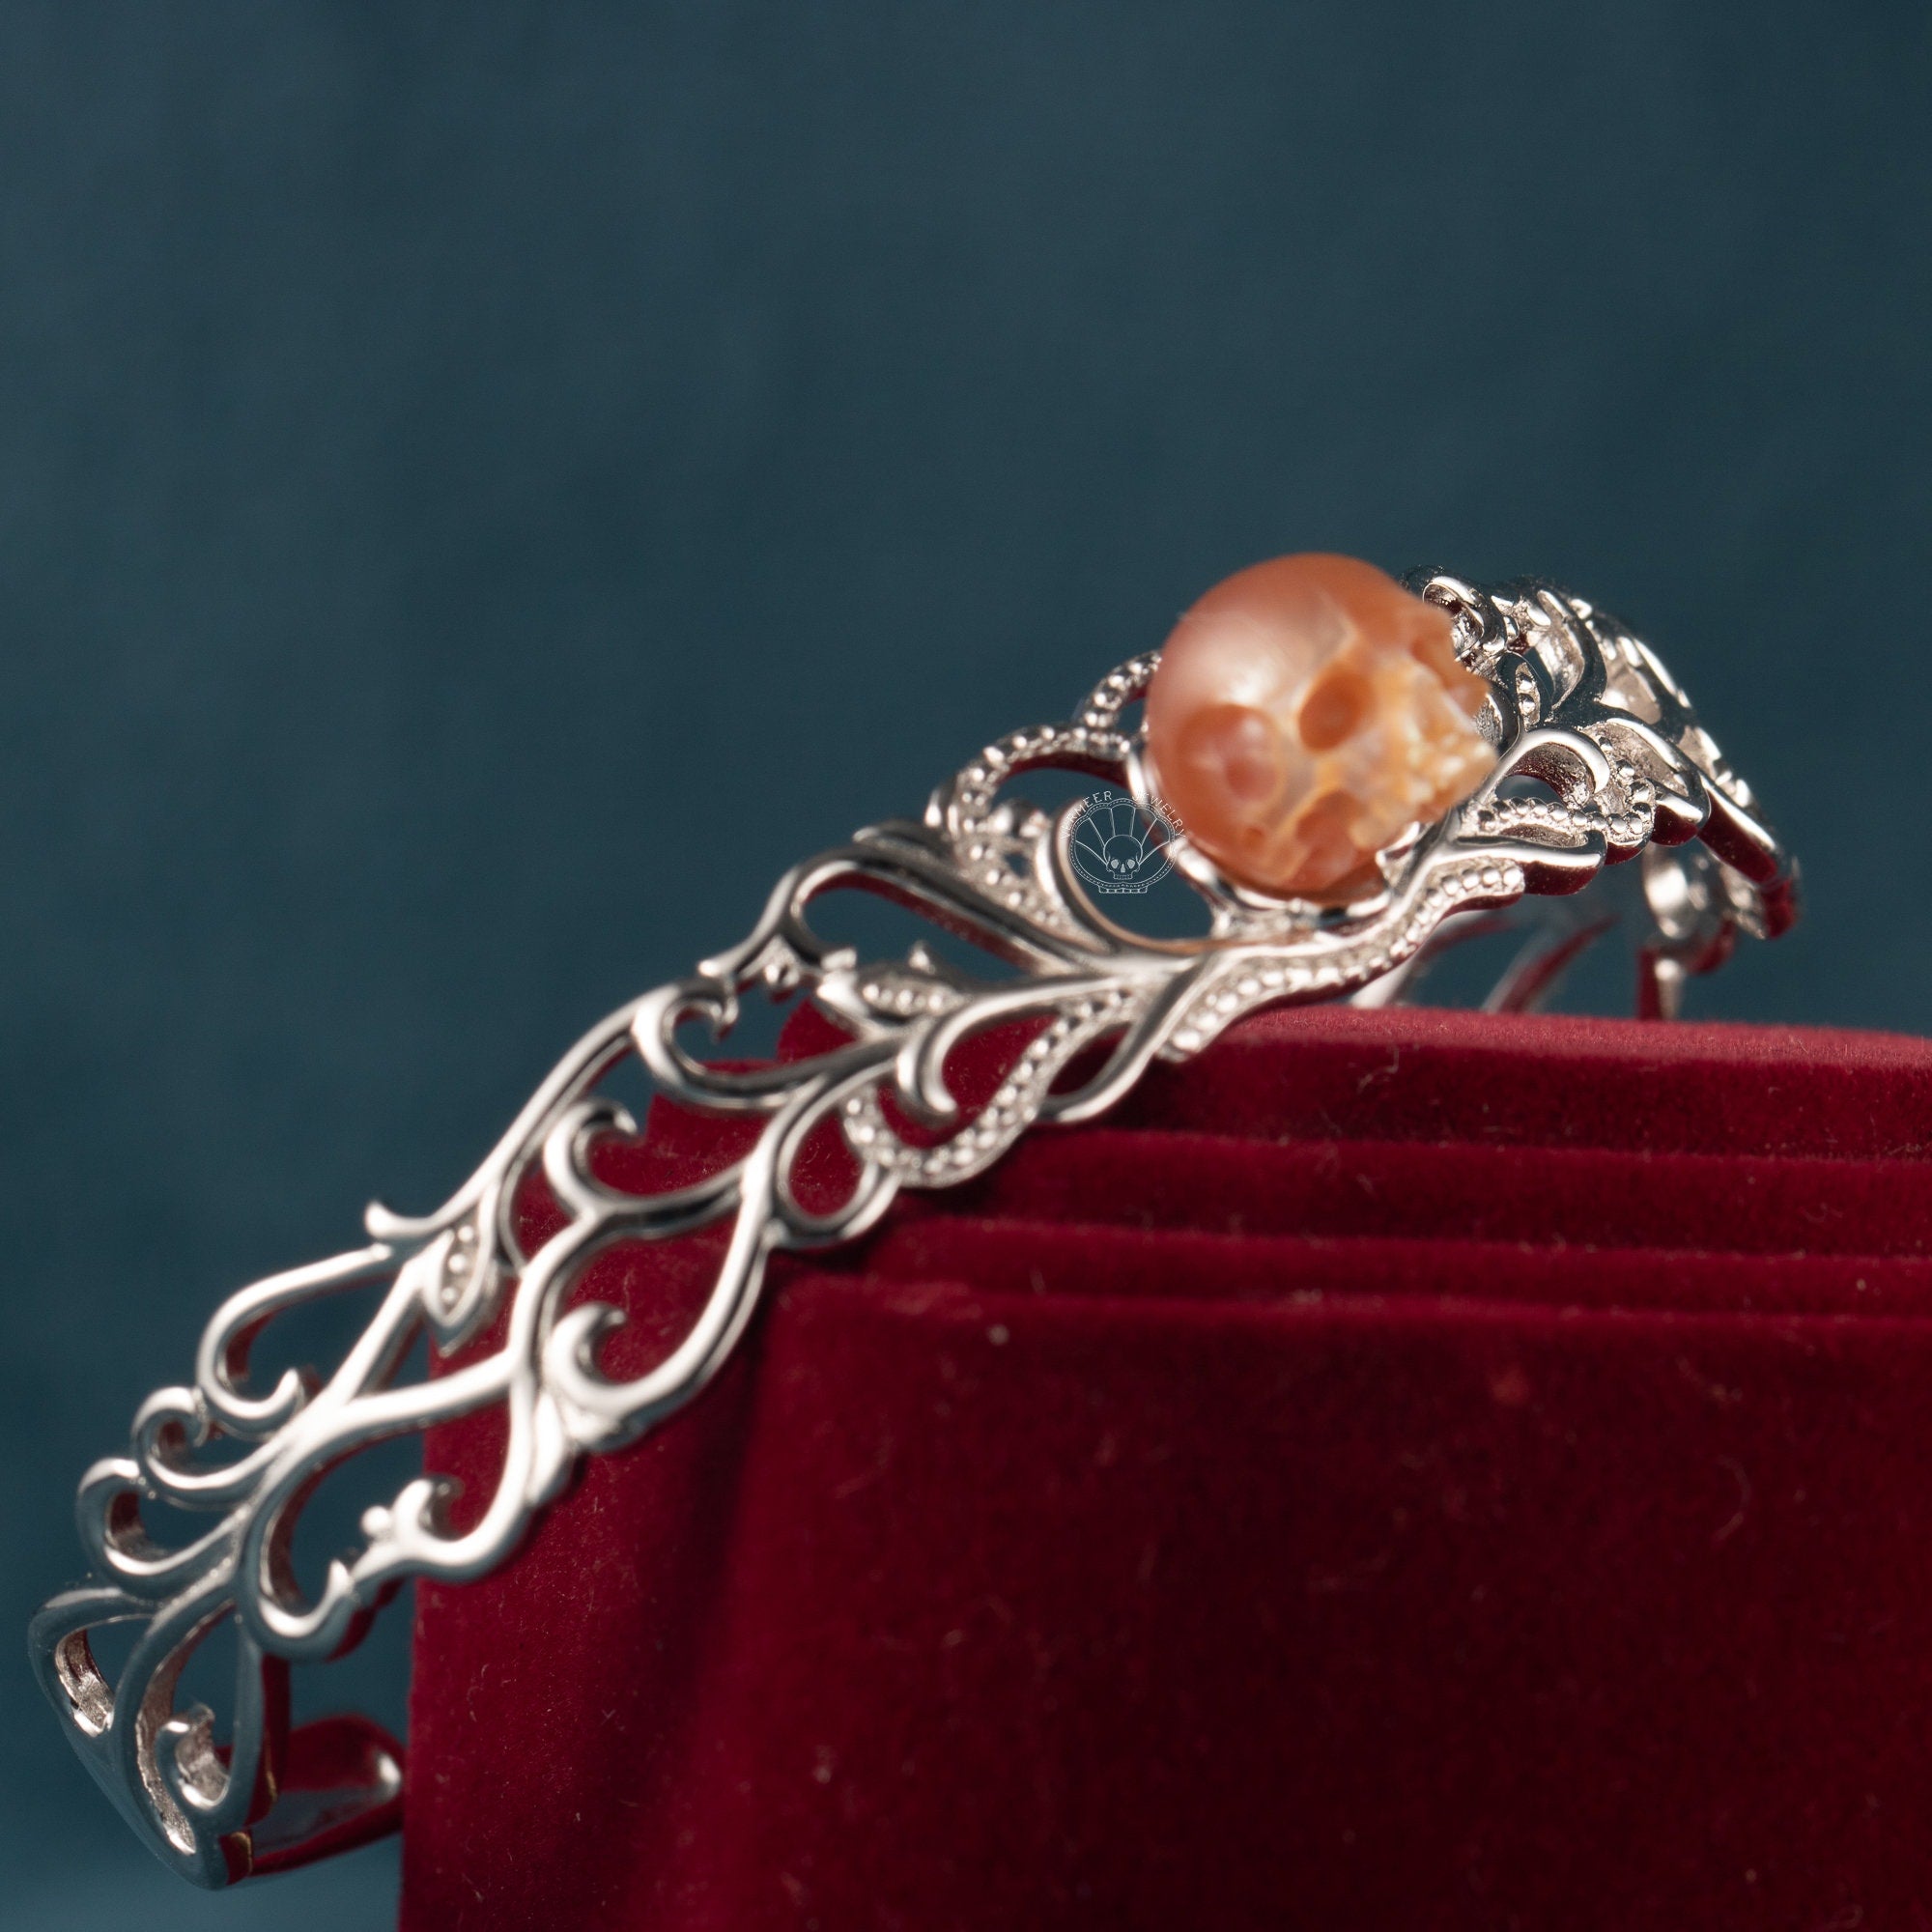 skull carved pearl bracelet handmade flower shape bangle sterling silver gothic jewelry for lover